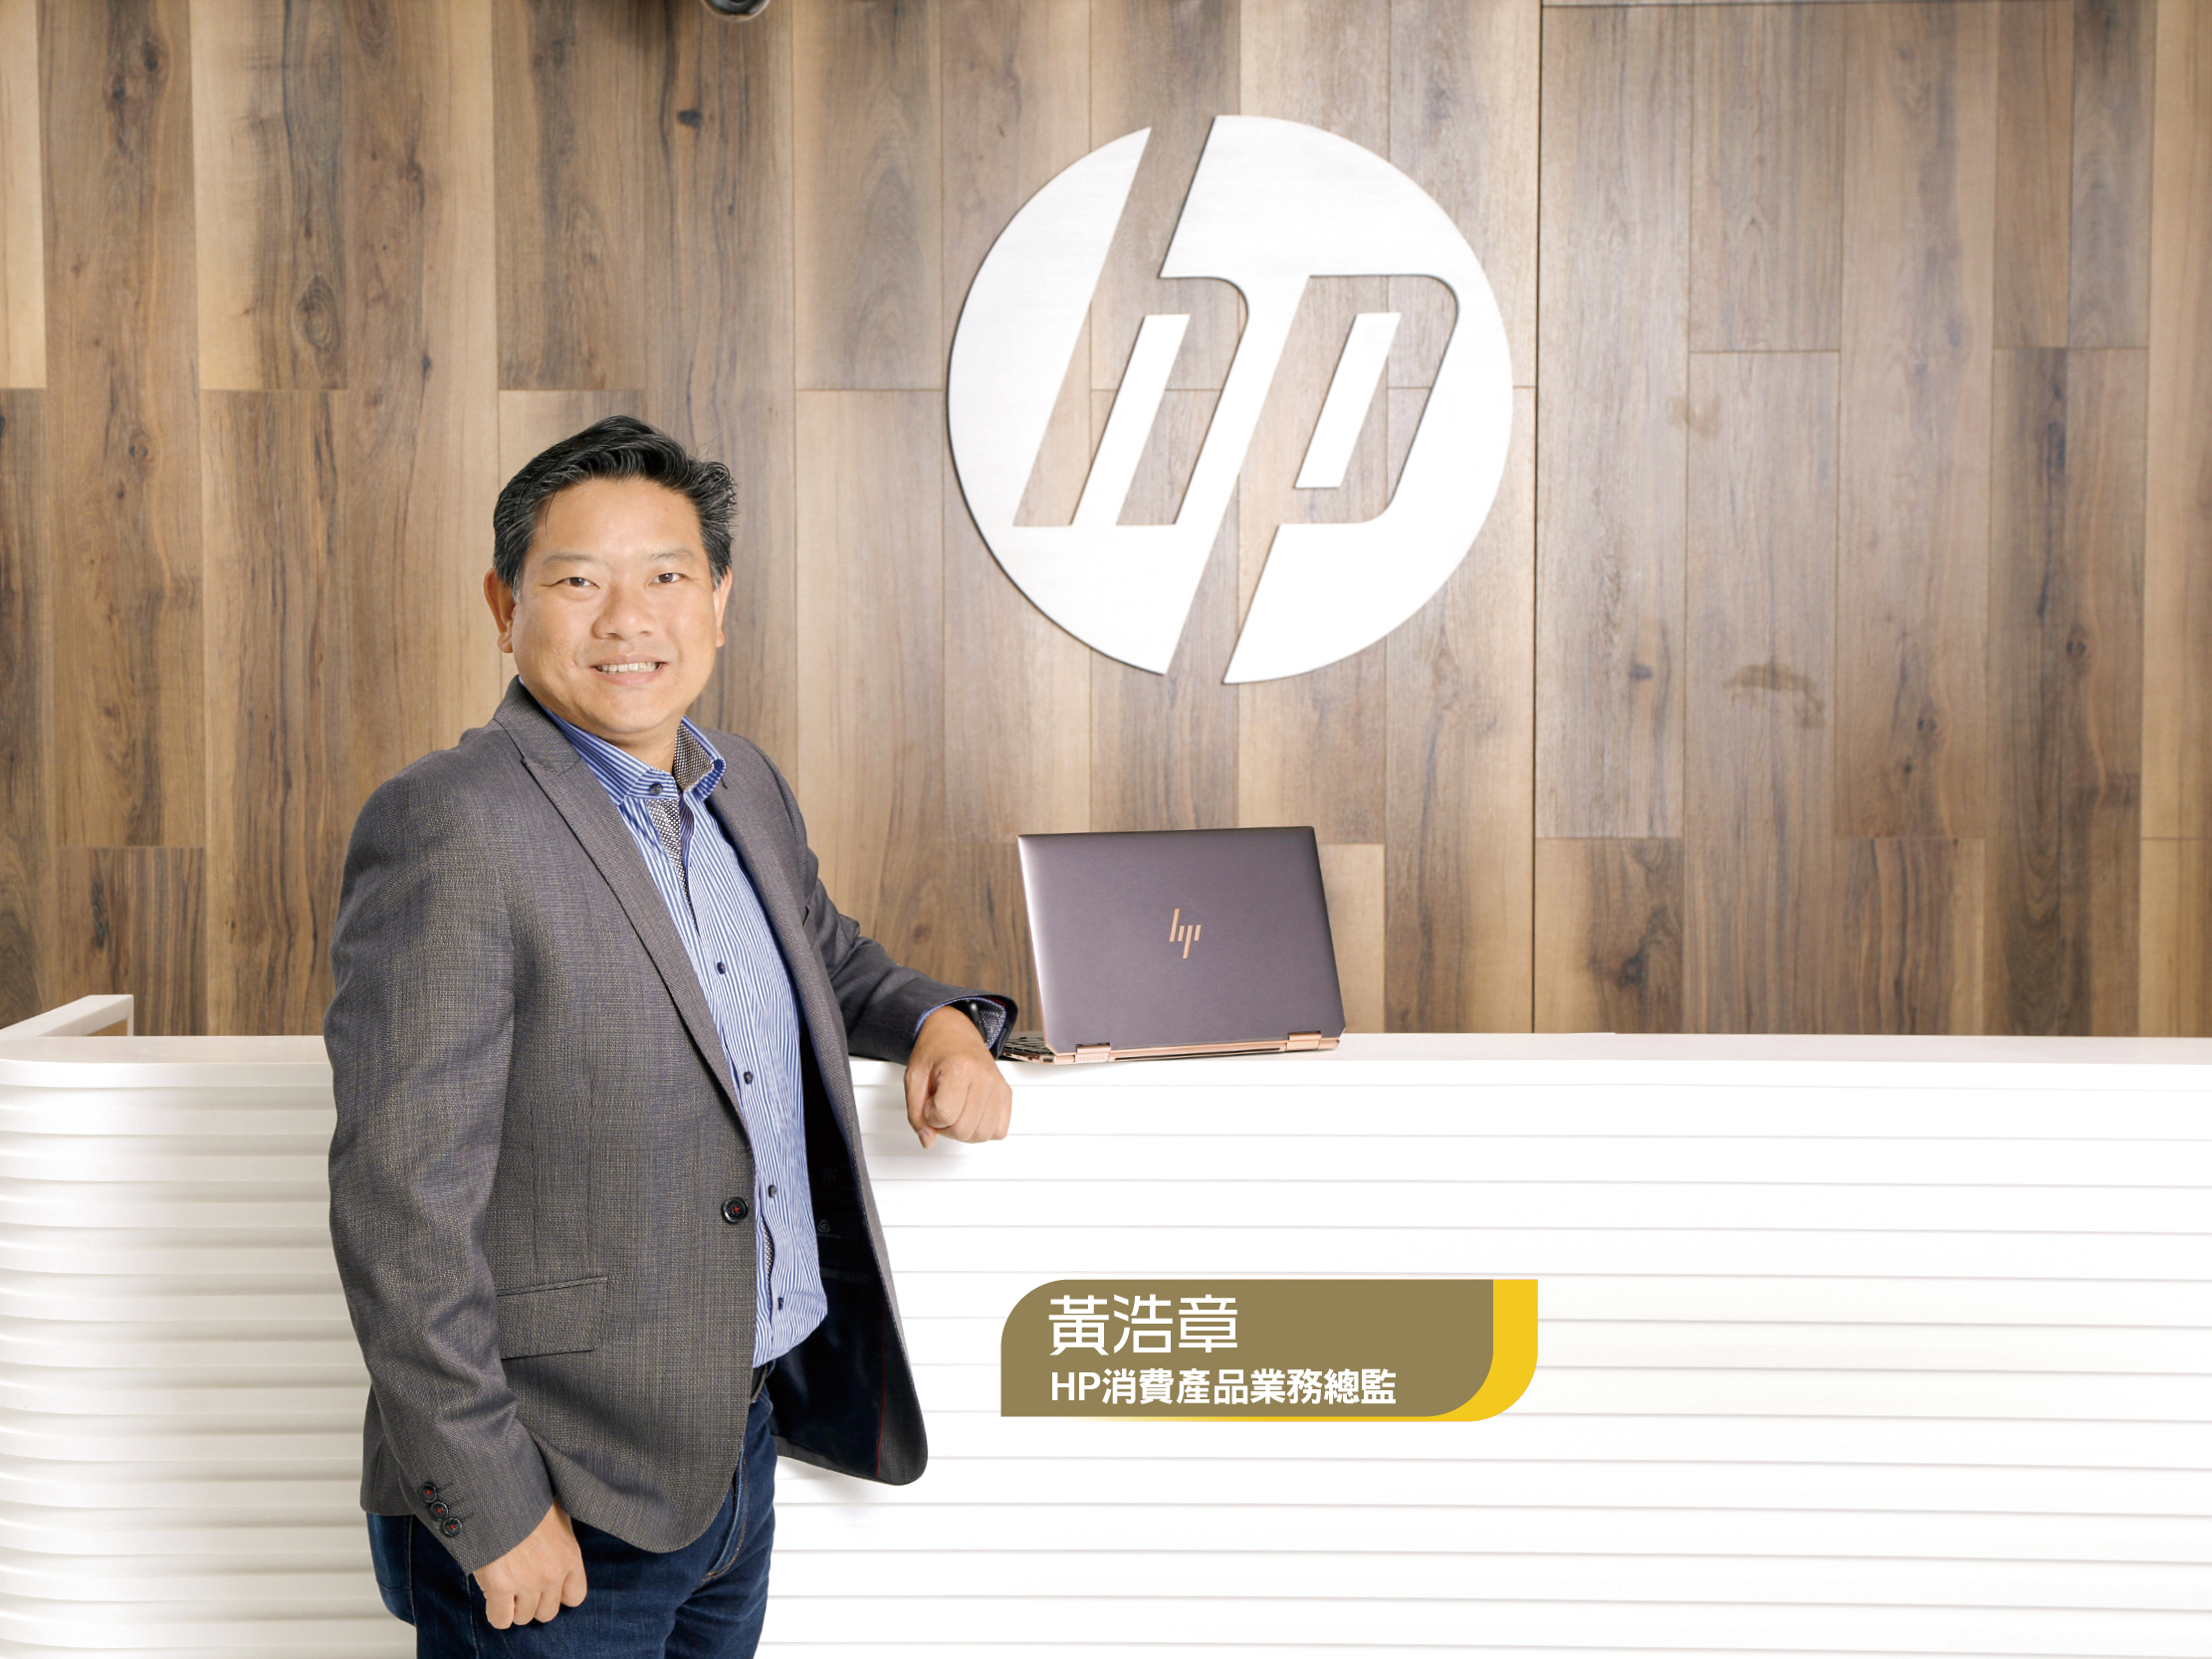 HP 消費產品業務總監黃浩章